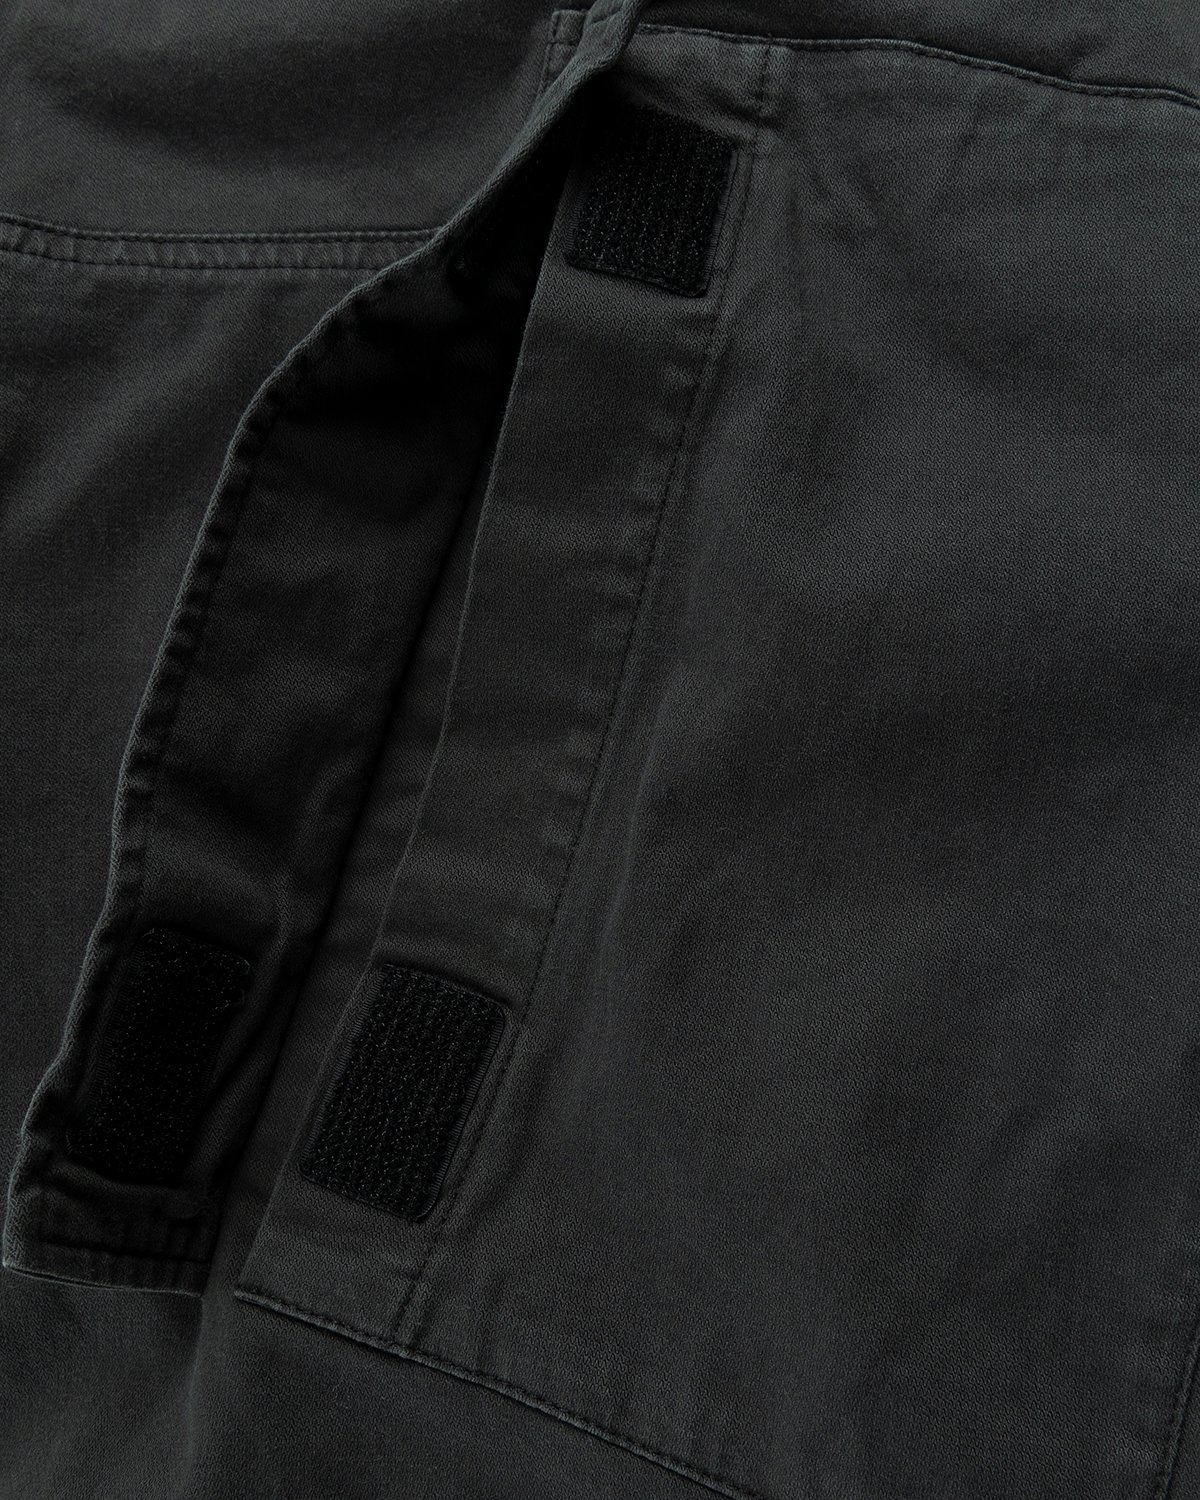 Acne Studios - Chevron Cargo Pants Anthracite Grey - Clothing - Grey - Image 5